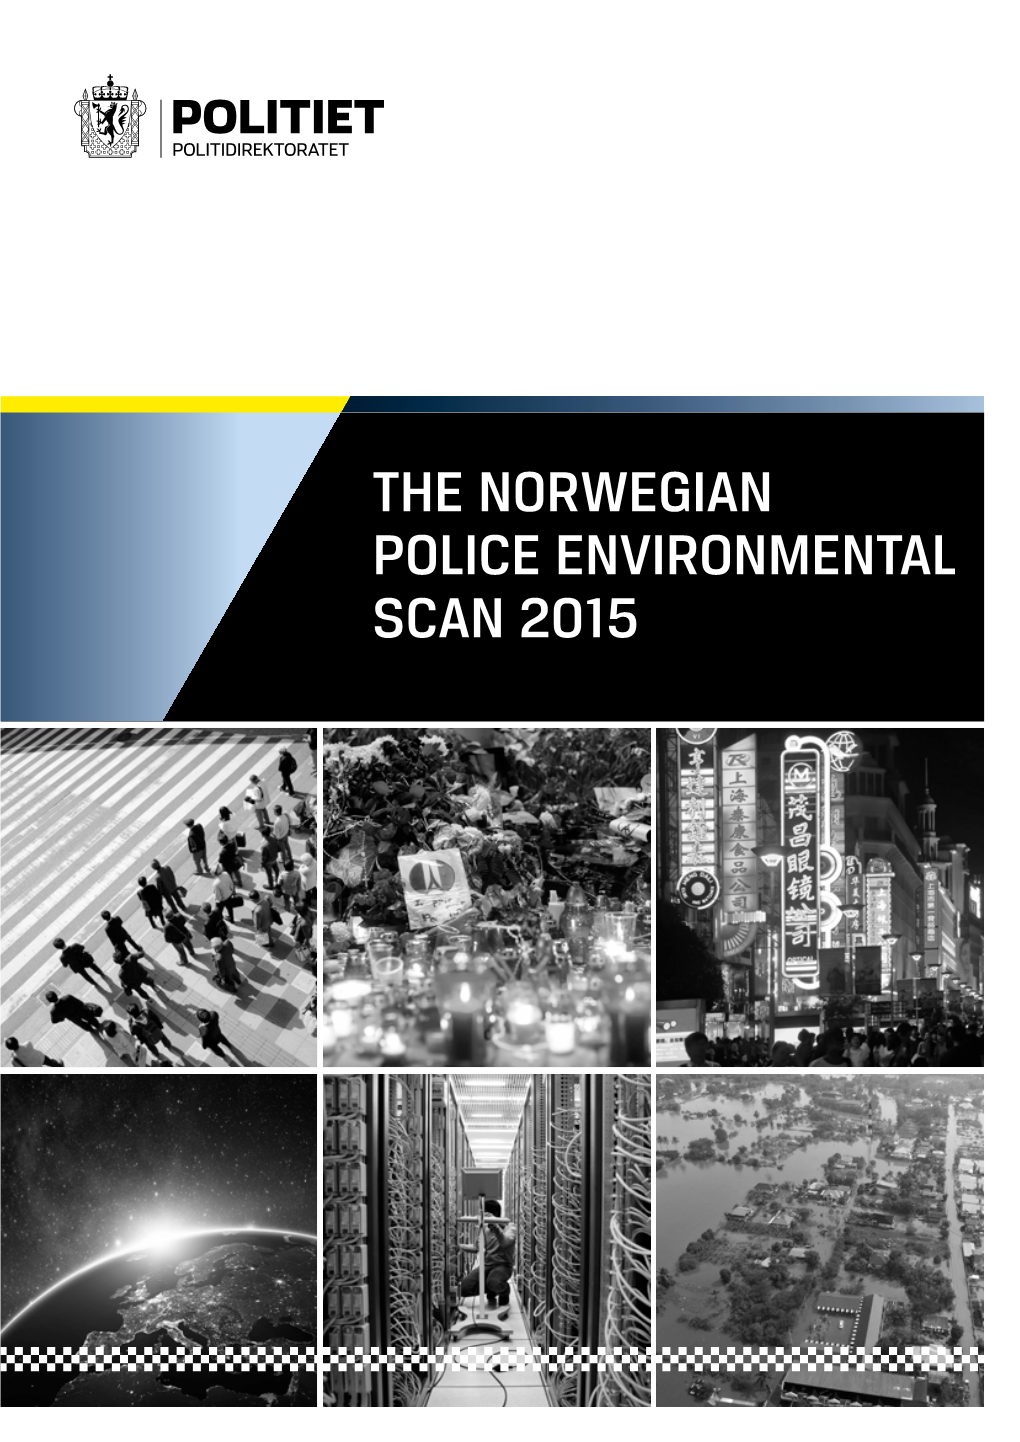 The Norwegian Police Environmental Scan 2015